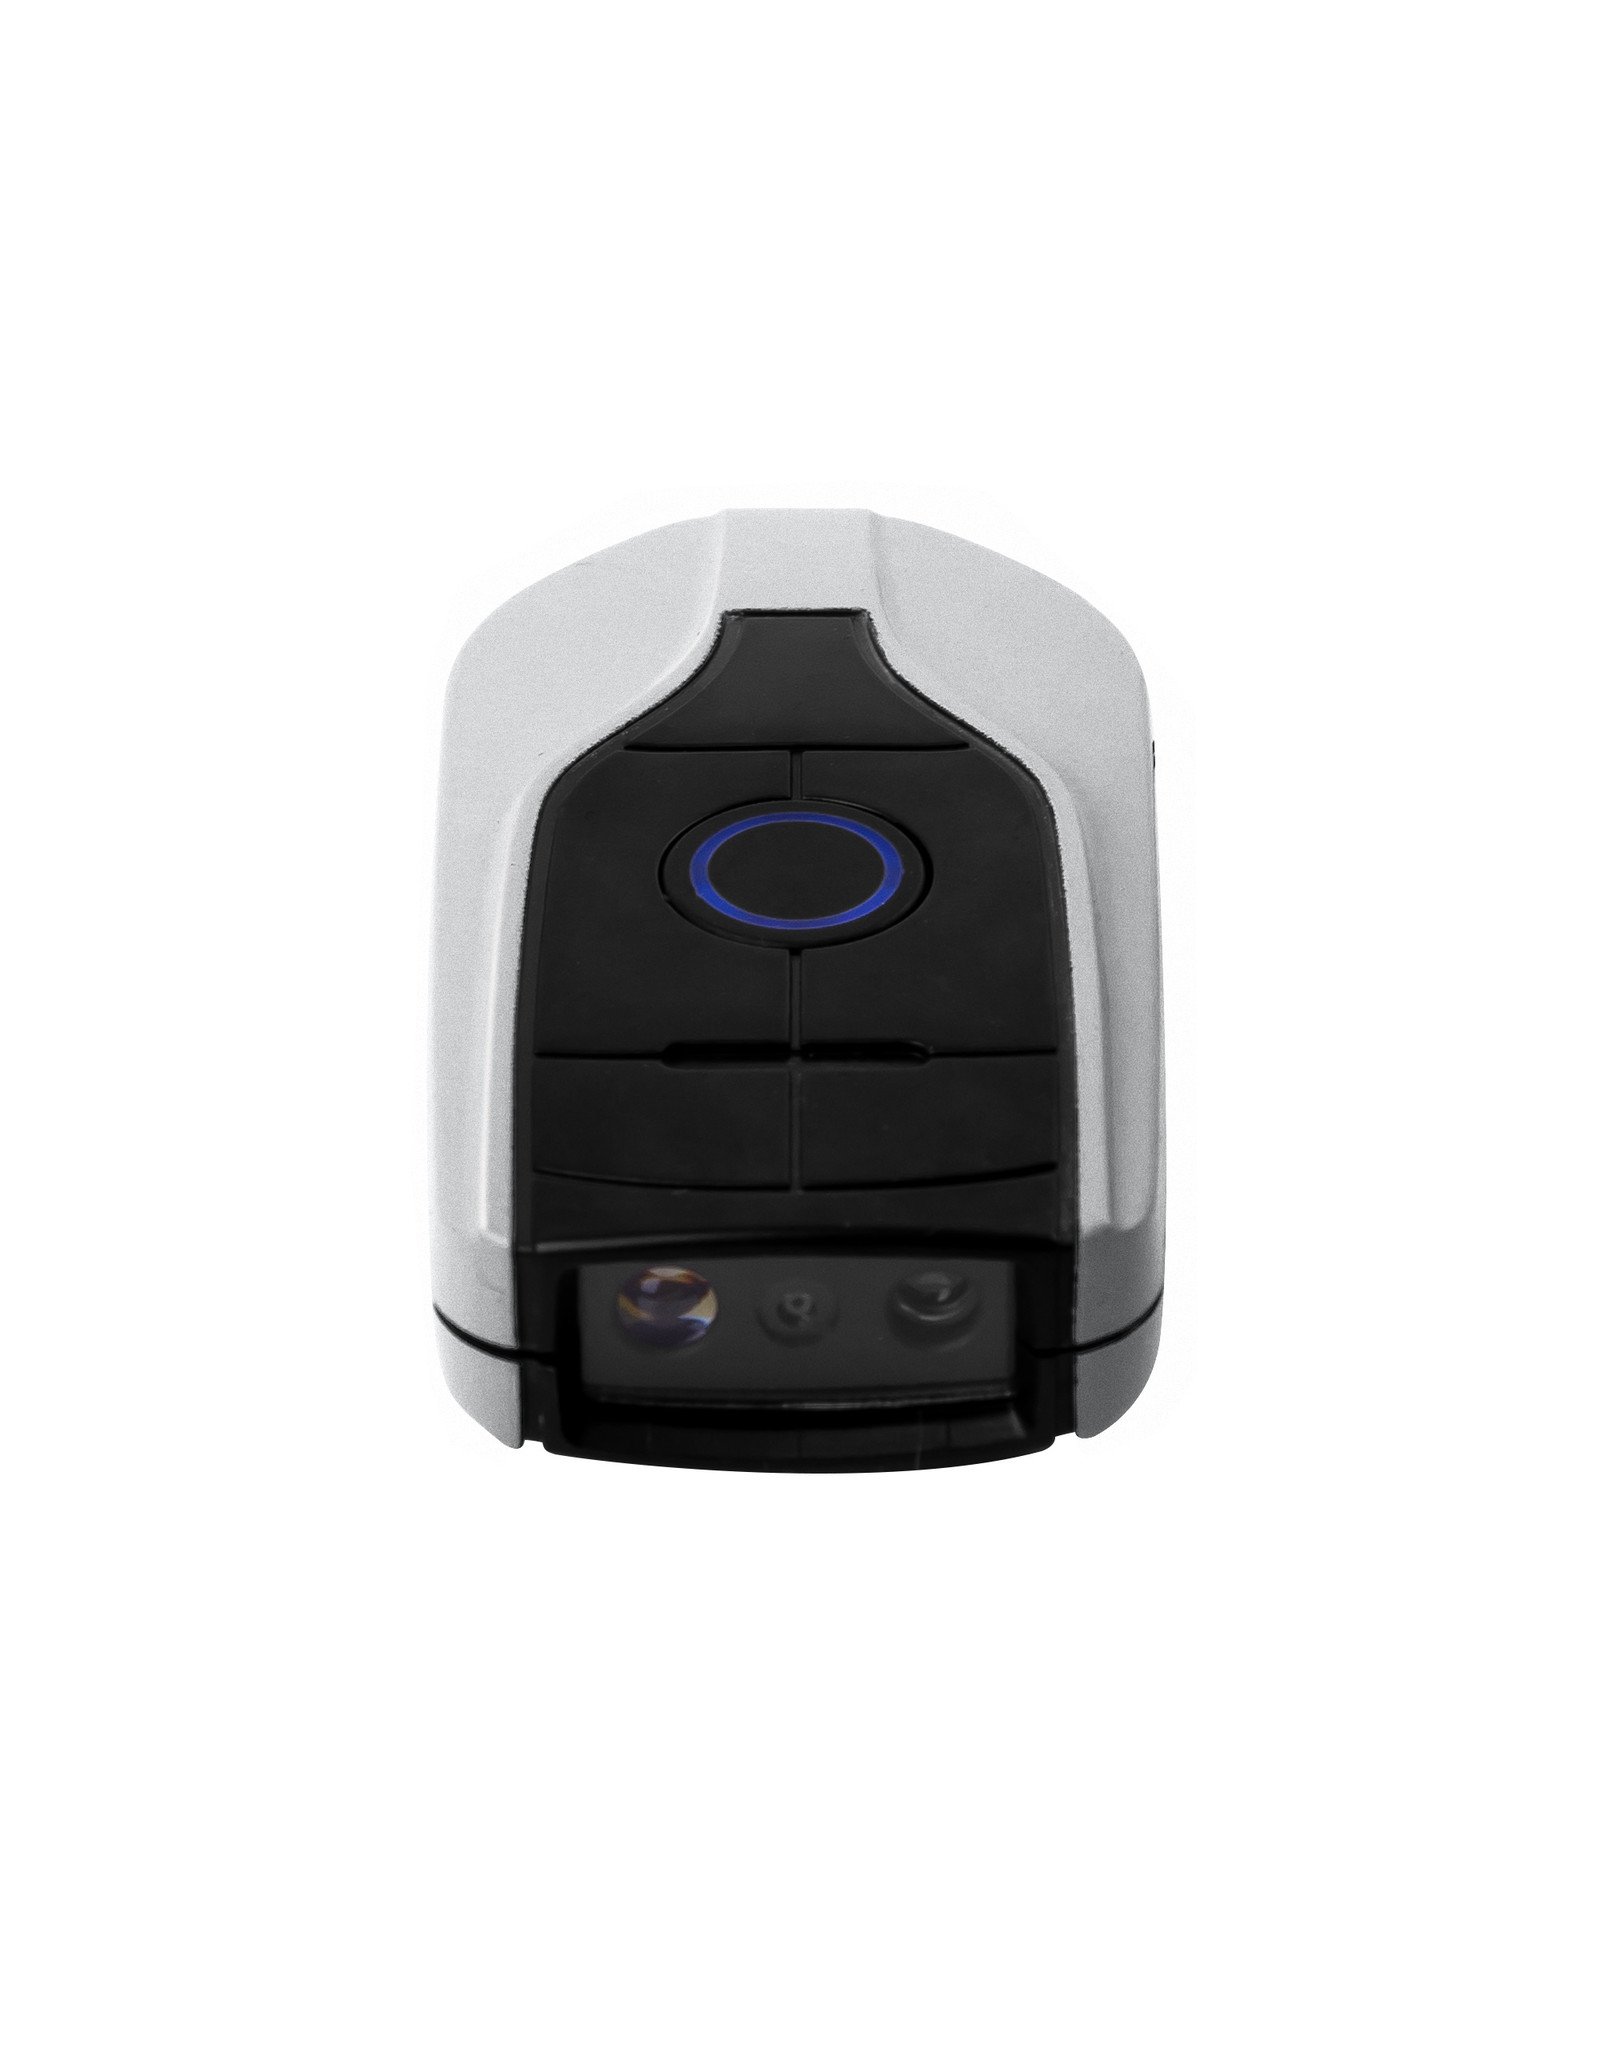 DTRONIC Bluetooth barcodescanner Mini - DTRONIC - DI9150